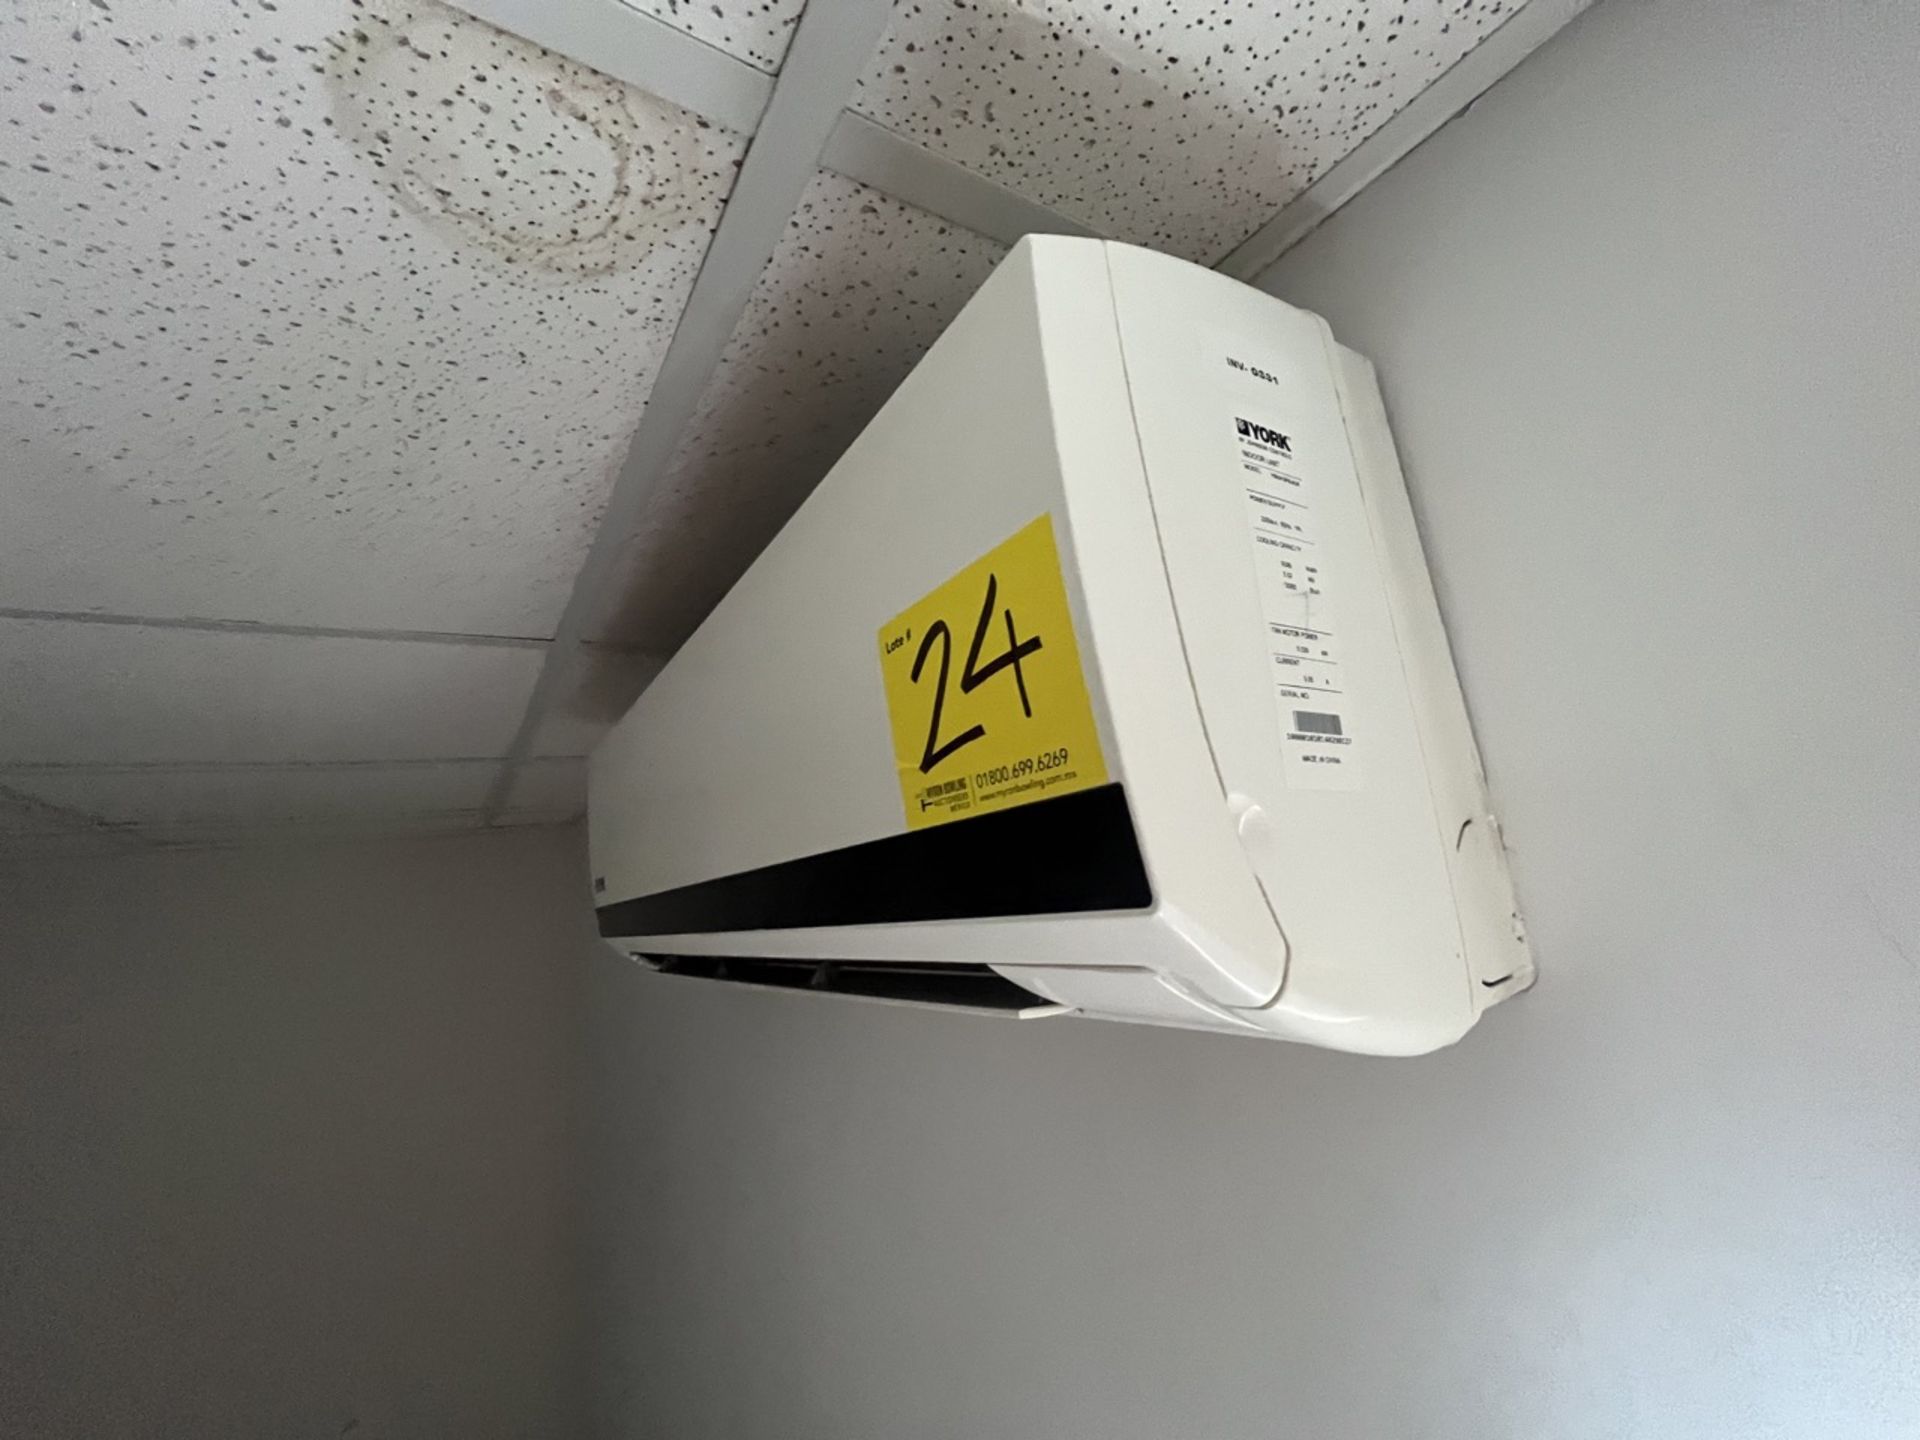 York minisplit air conditioner with control, Model YSEA12FS-ADK, 100001010140290127, Series, 220 Vo - Image 2 of 7